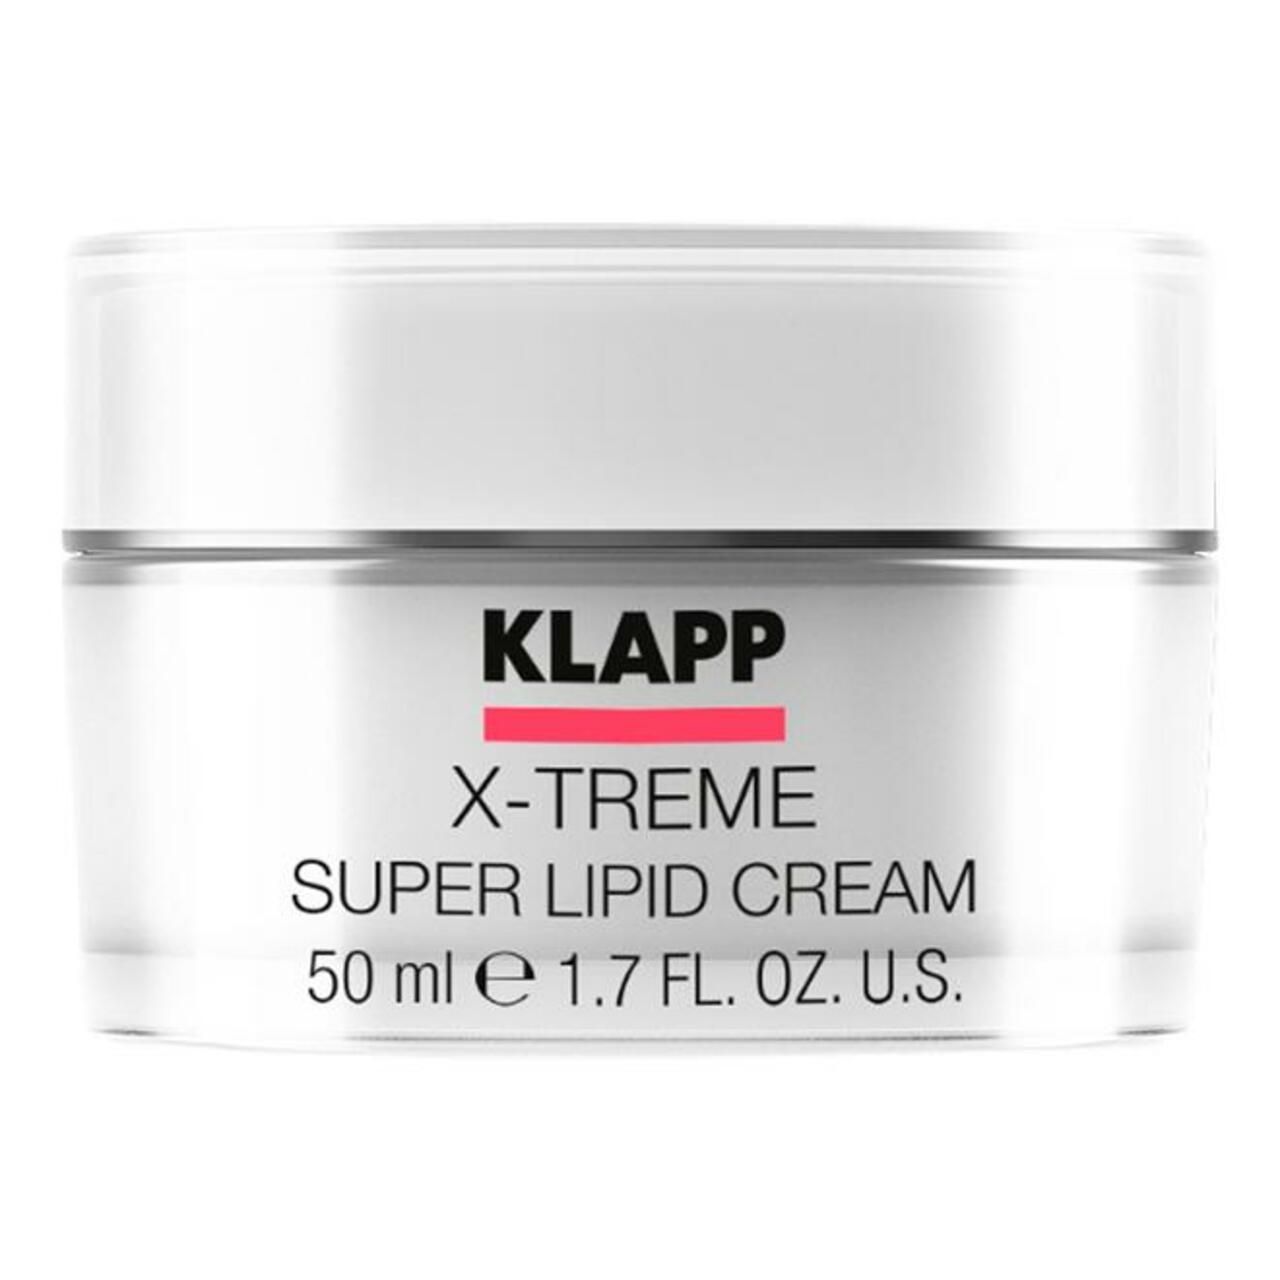 Klapp, X-Treme Super Lipid Cream